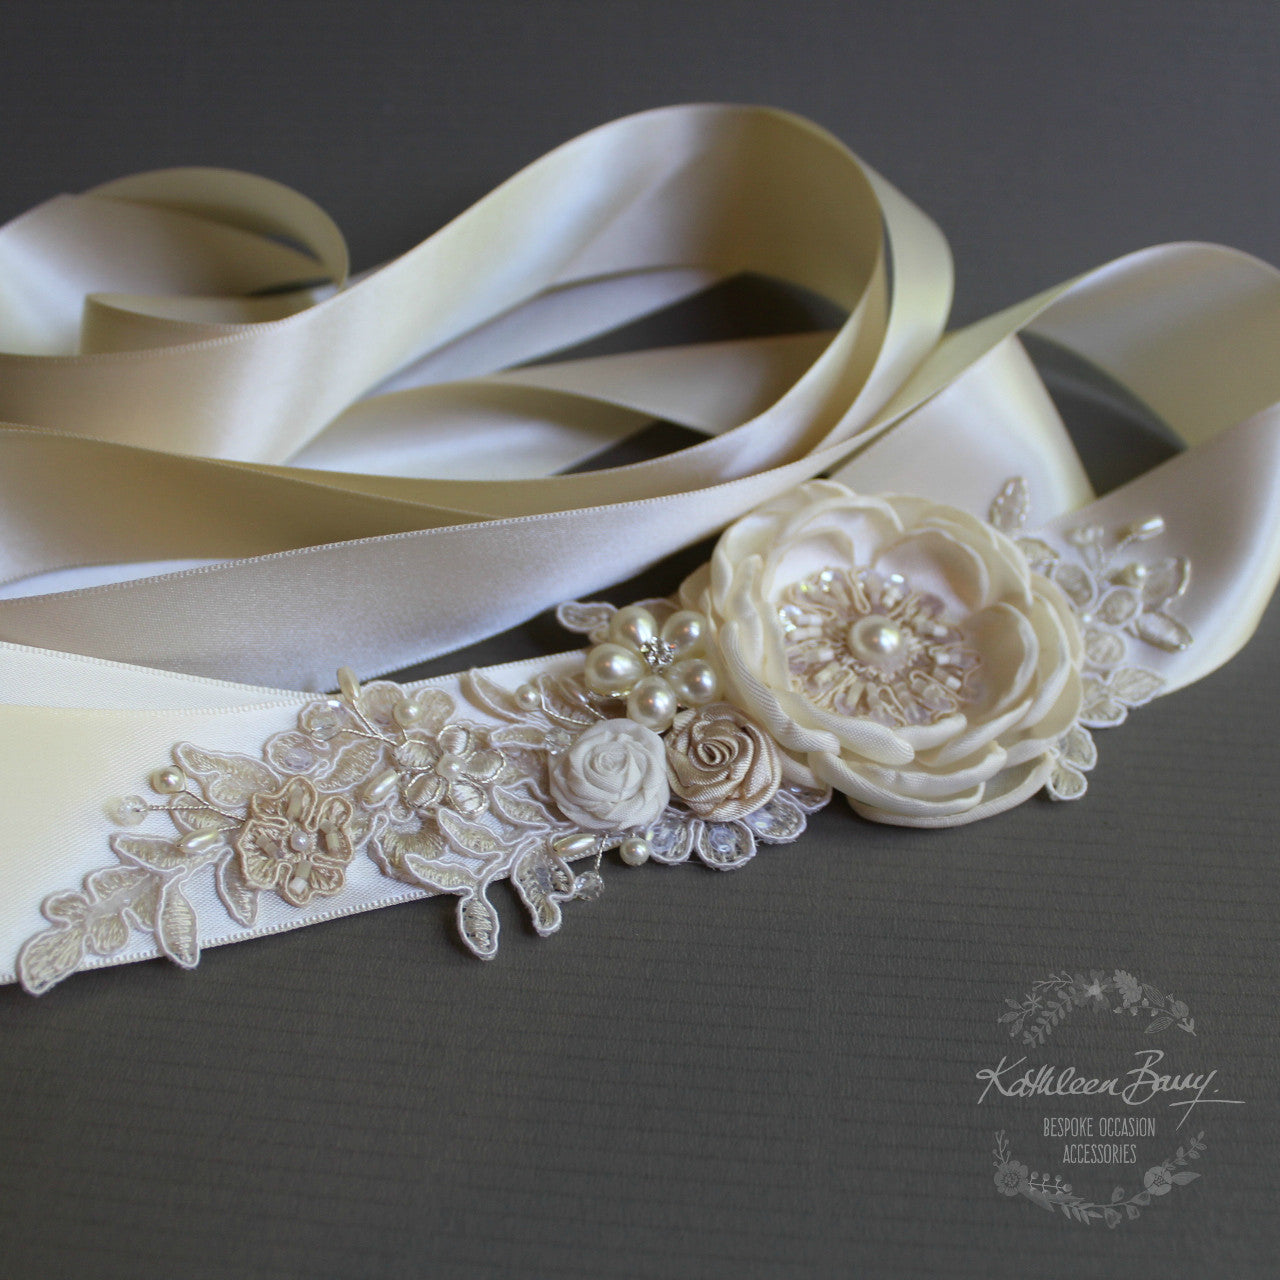 Emma Wedding dress sash belt - floral with lace - champagne ivory cream